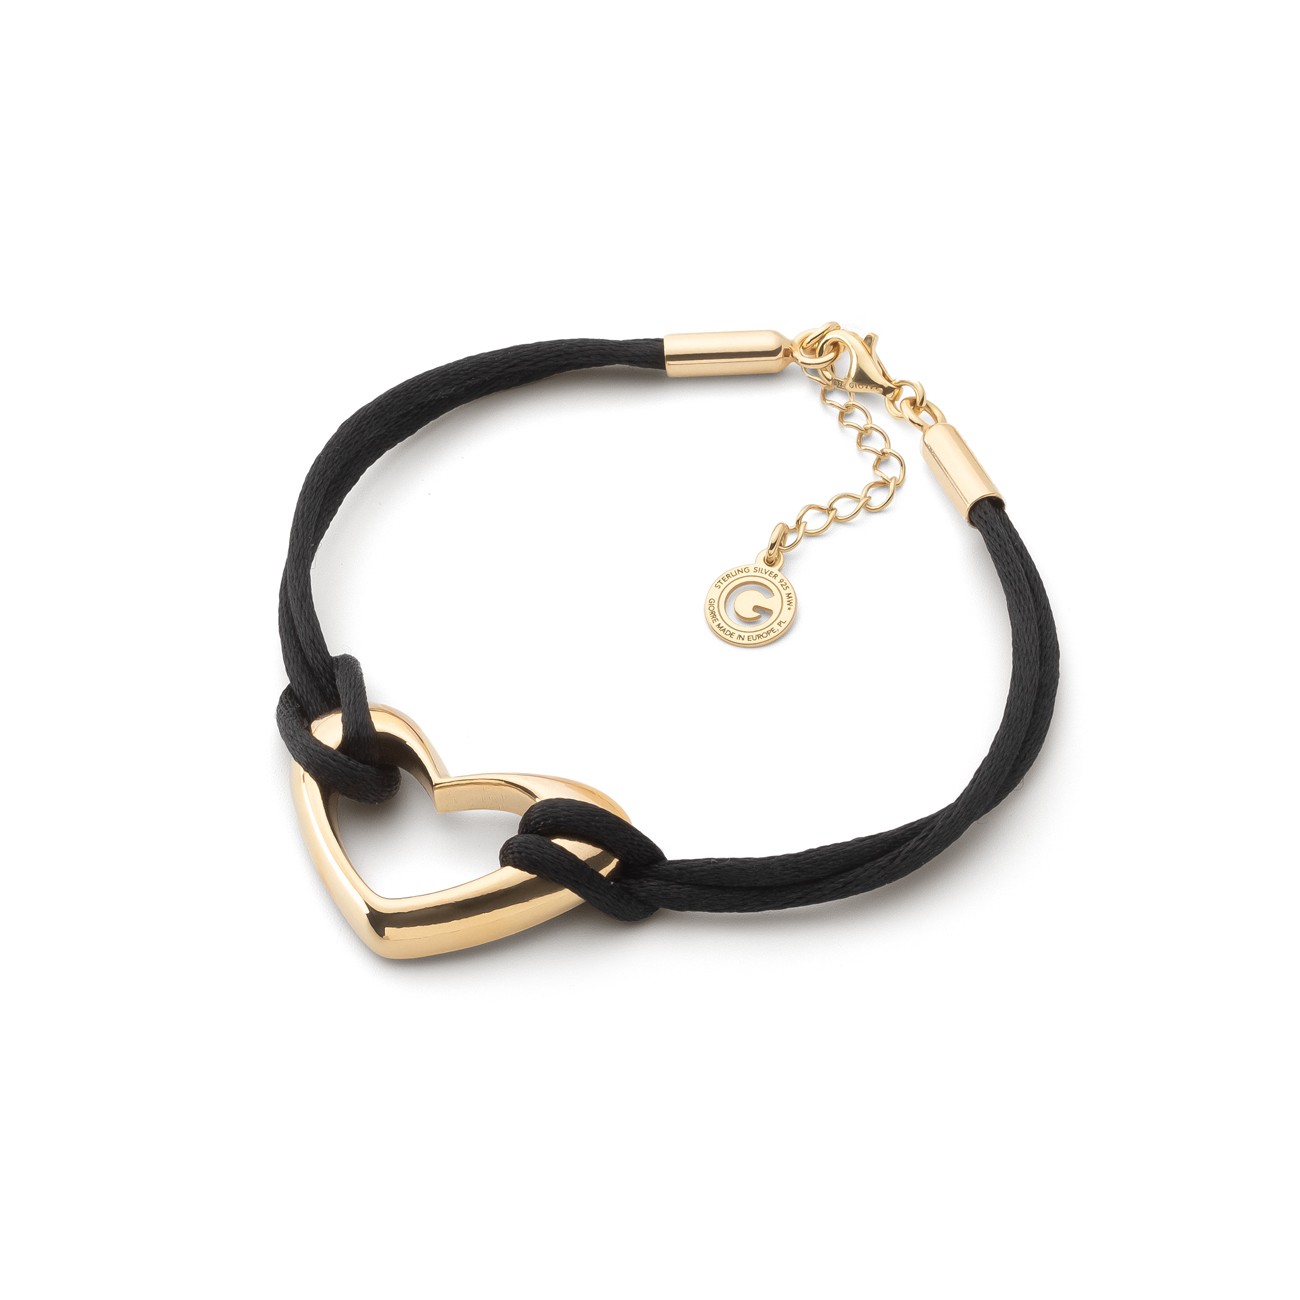 The Fish Silver Thread Bracelet (Black) - Buy trendy bracelets online — KO  Jewellery